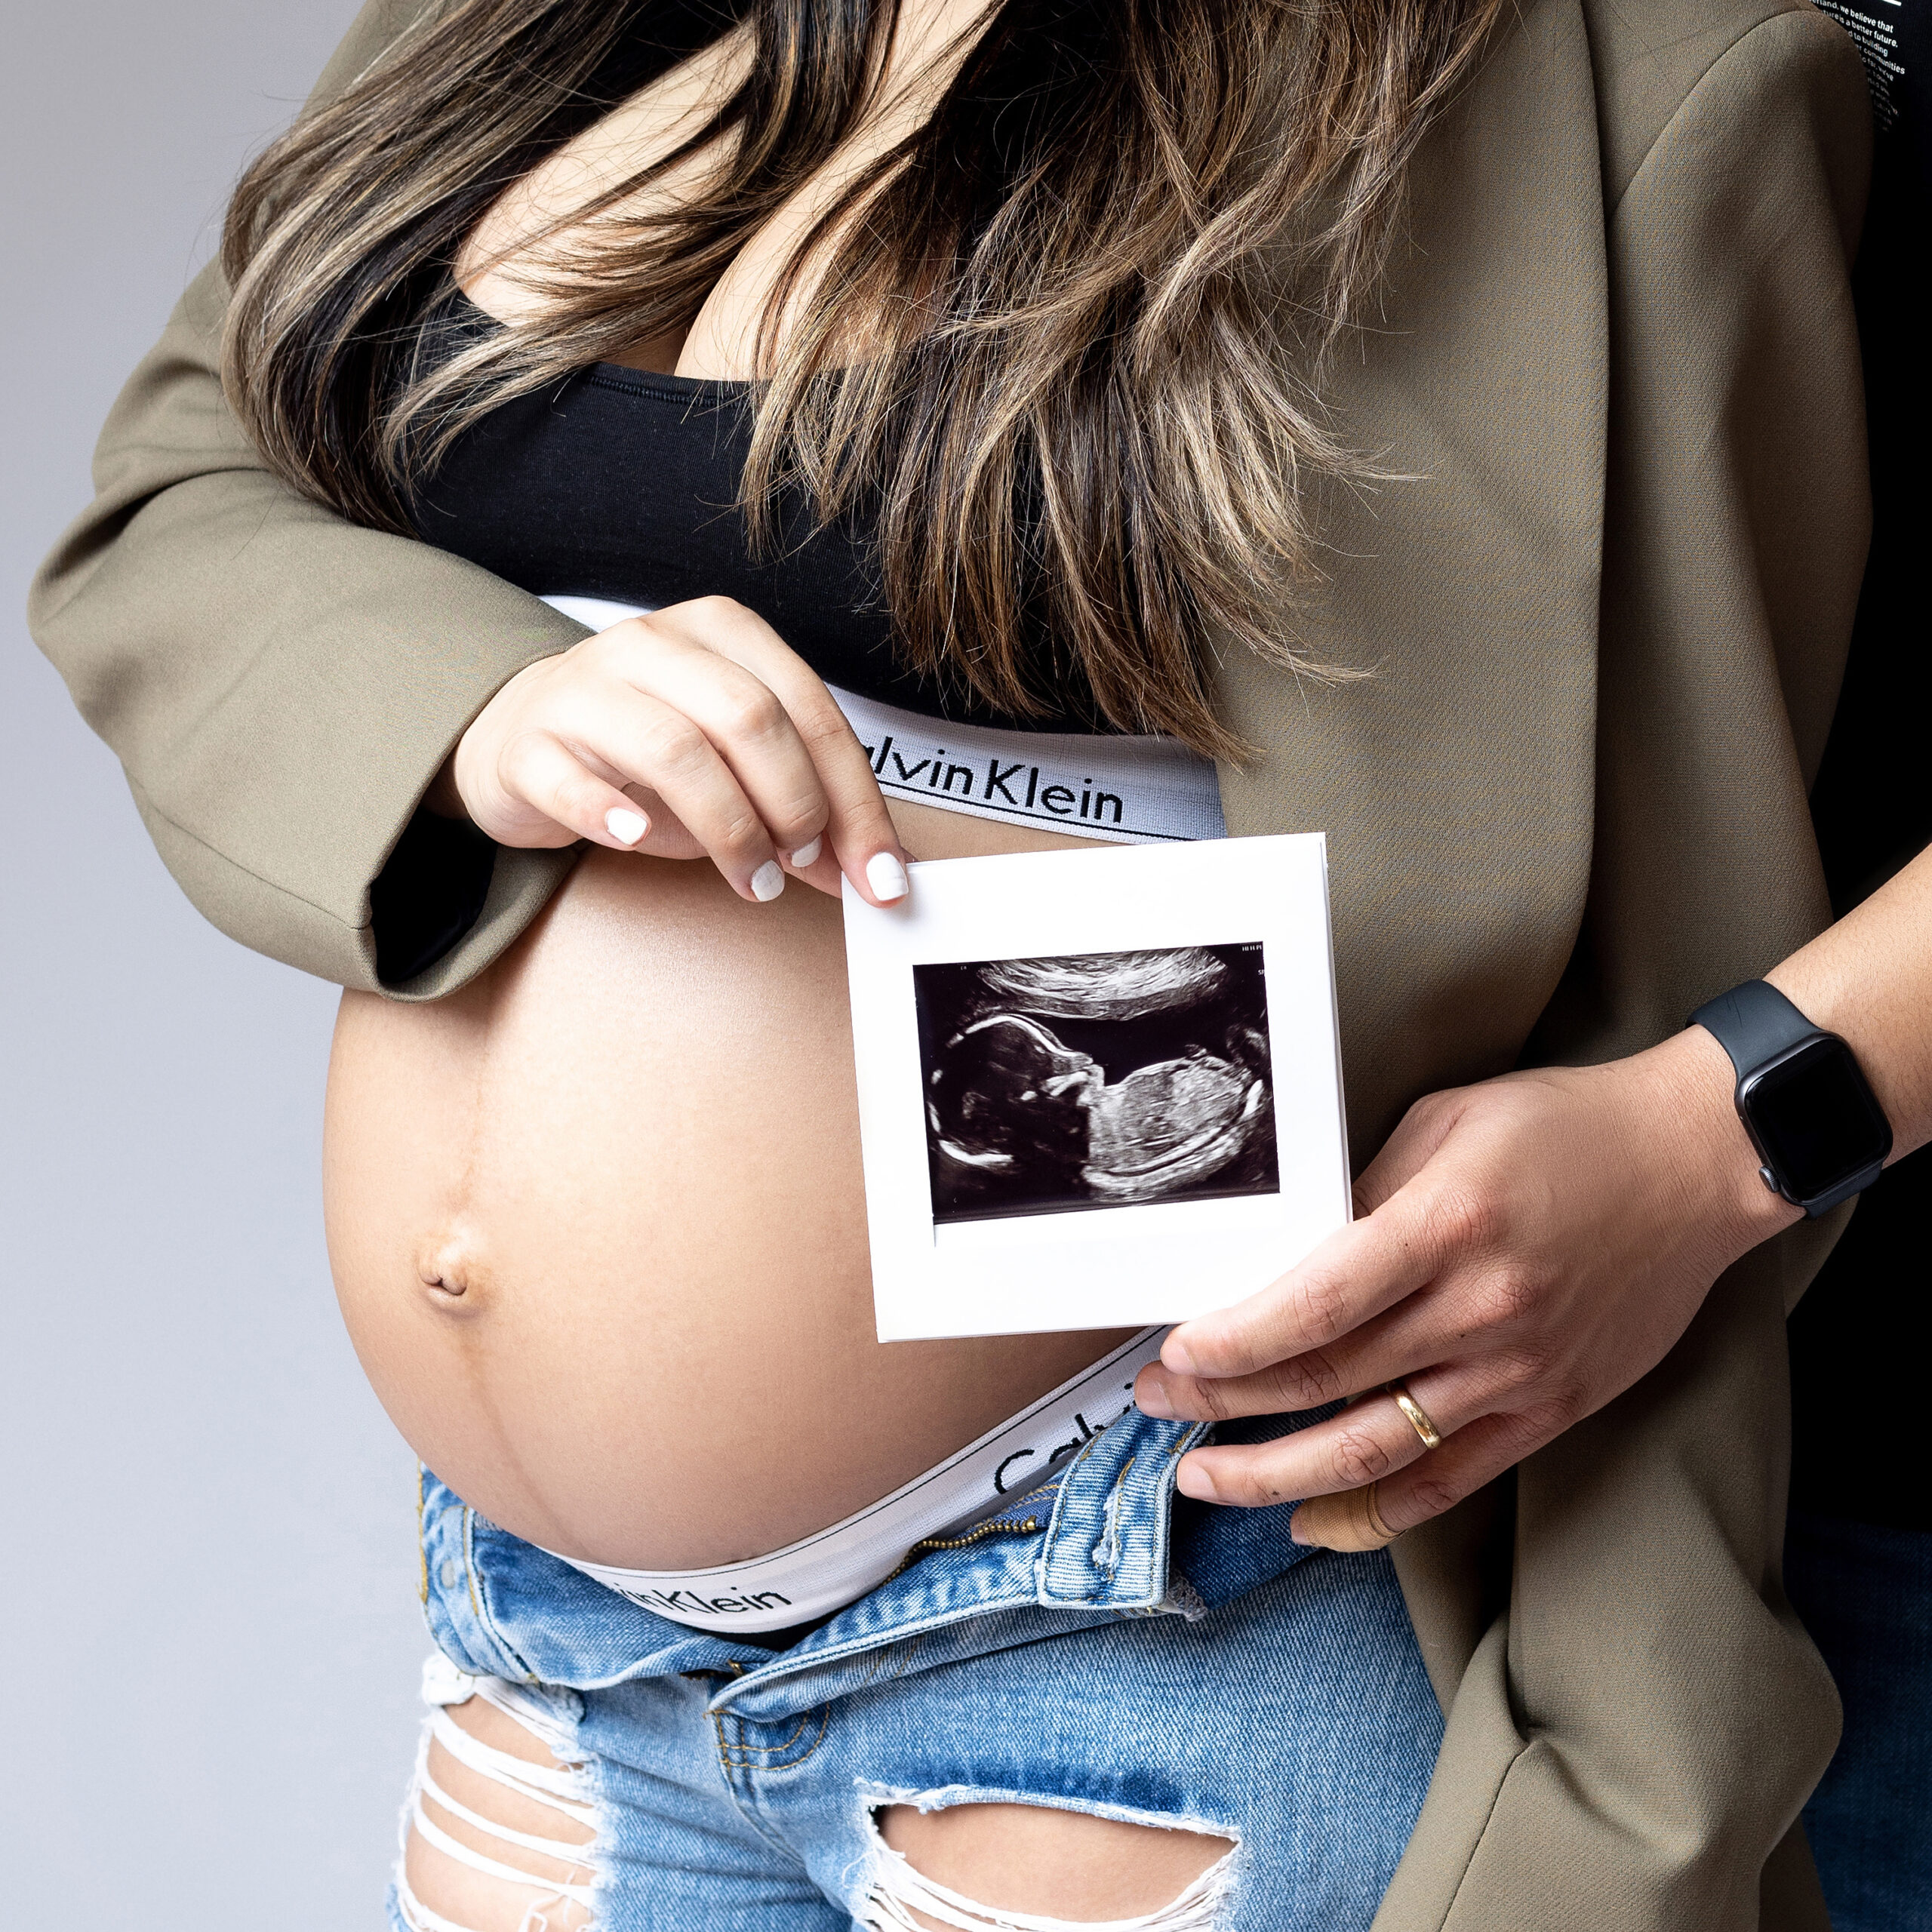 During pregnancy unborn babies respond to external stimuli